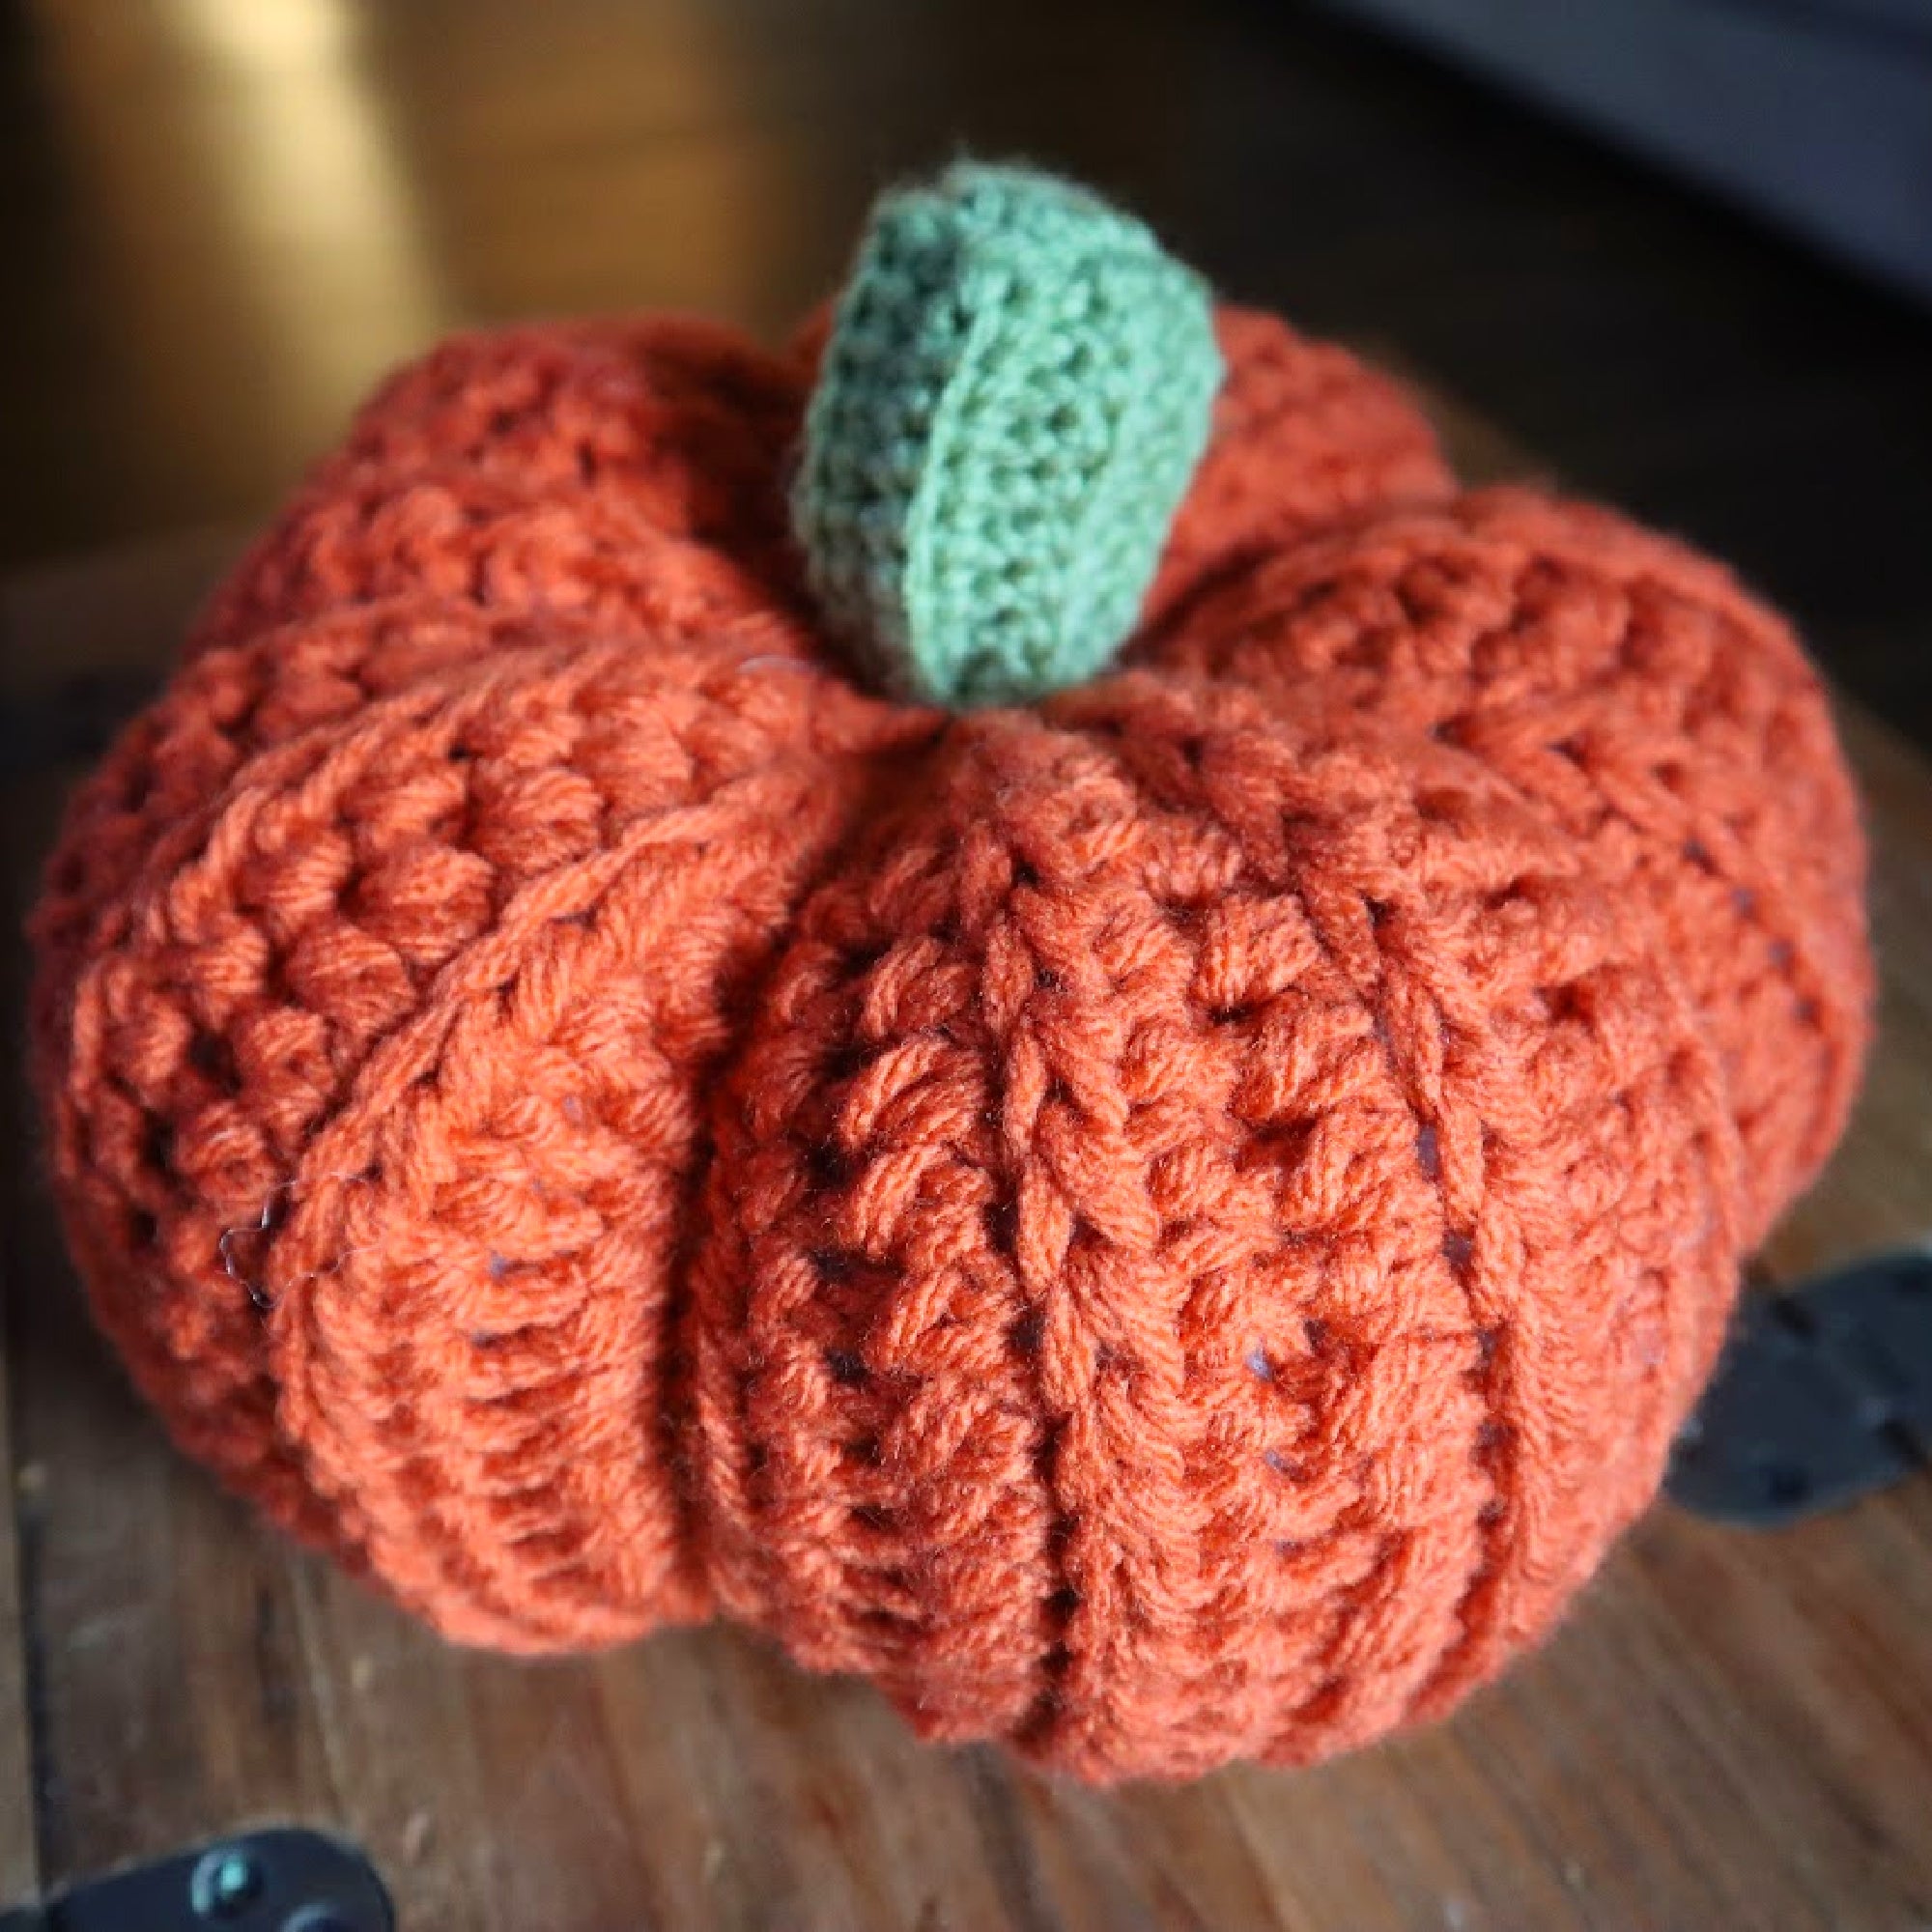 orange crochet pumpkin with a green stem on a wooden table